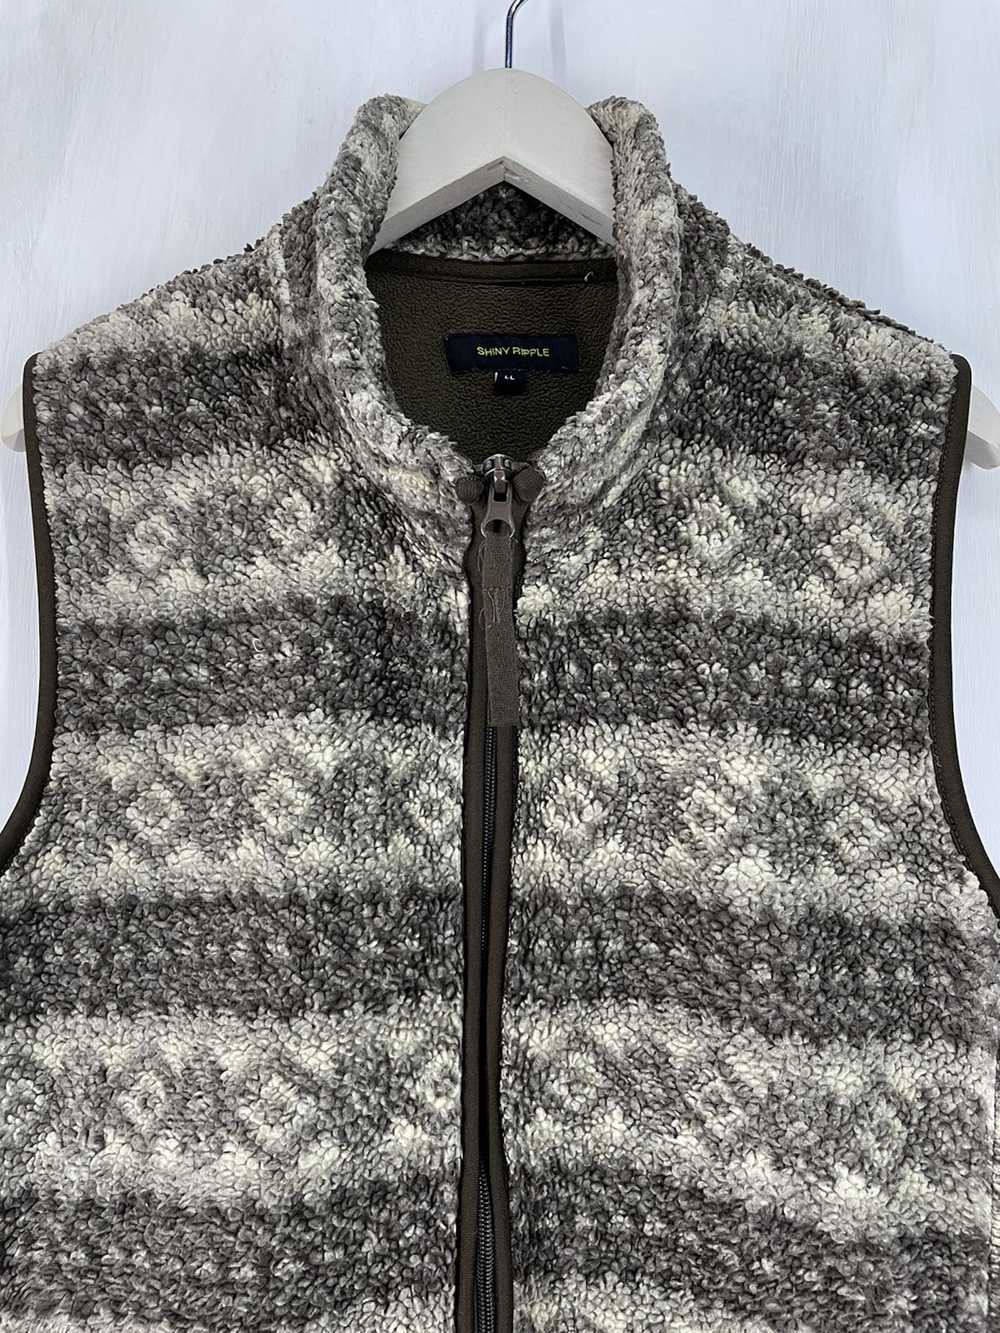 Japanese Brand Shiny Ripple fleece vest - image 3